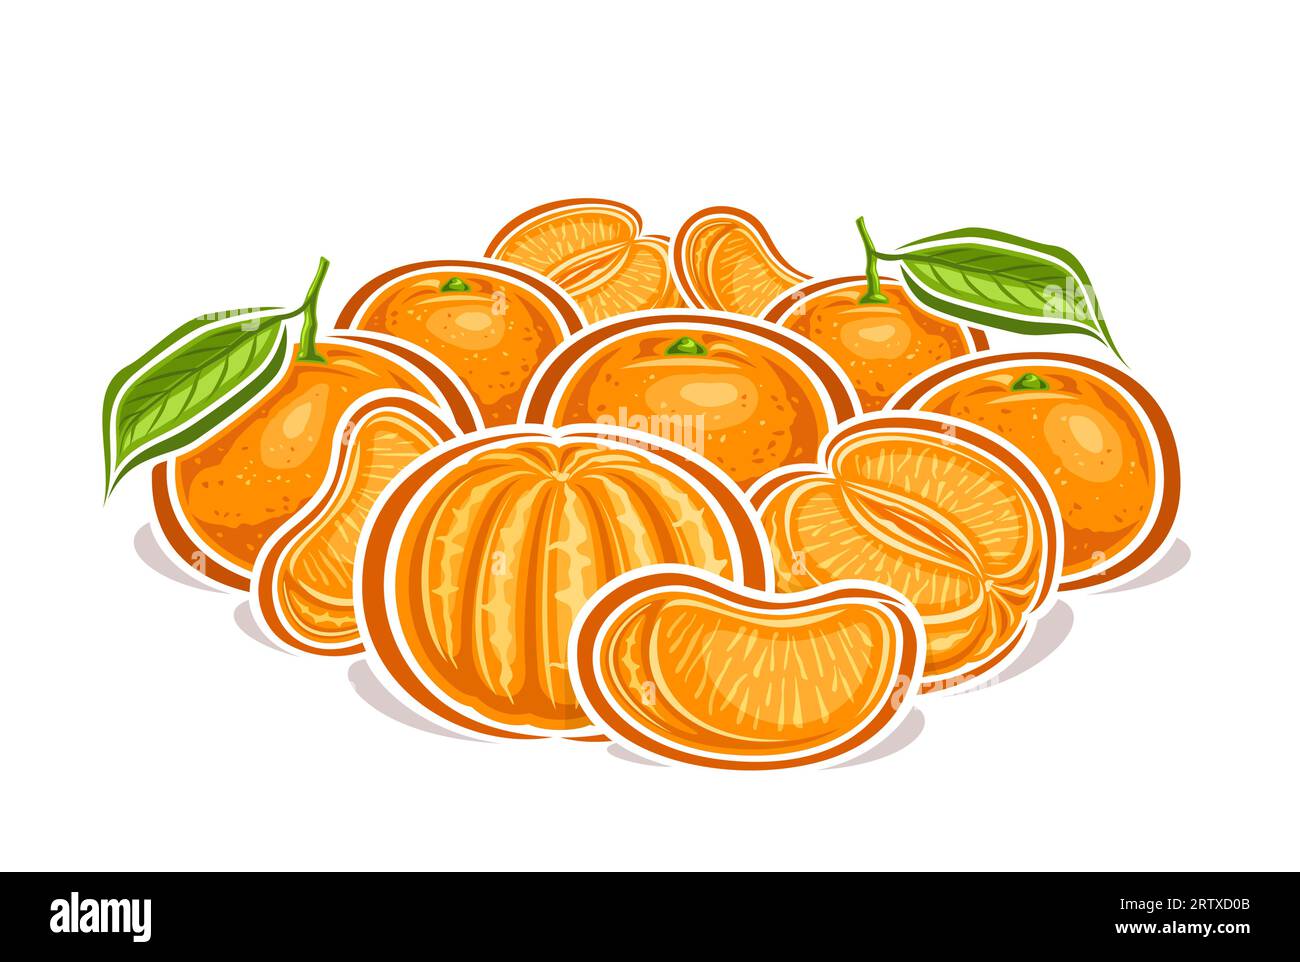 https://c8.alamy.com/comp/2RTXD0B/vector-logo-for-mandarins-decorative-horizontal-poster-with-cartoon-design-mandarin-and-tangerine-fruity-still-life-composition-fruit-print-with-who-2RTXD0B.jpg